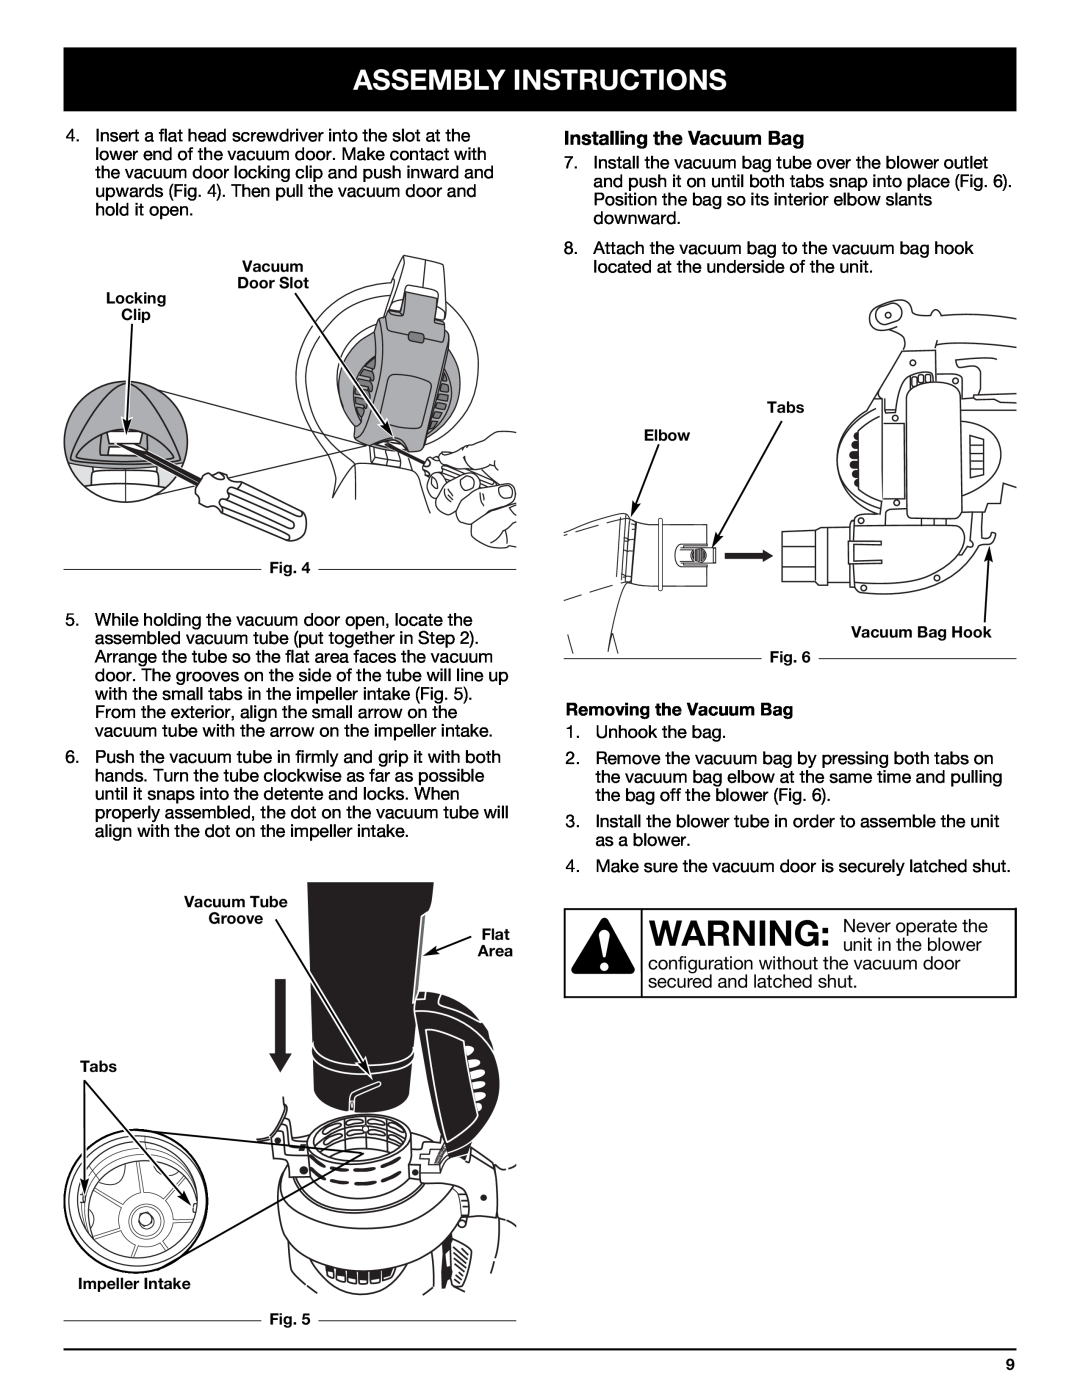 Bolens YM320BV manual Installing the Vacuum Bag, Removing the Vacuum Bag, Assembly Instructions 